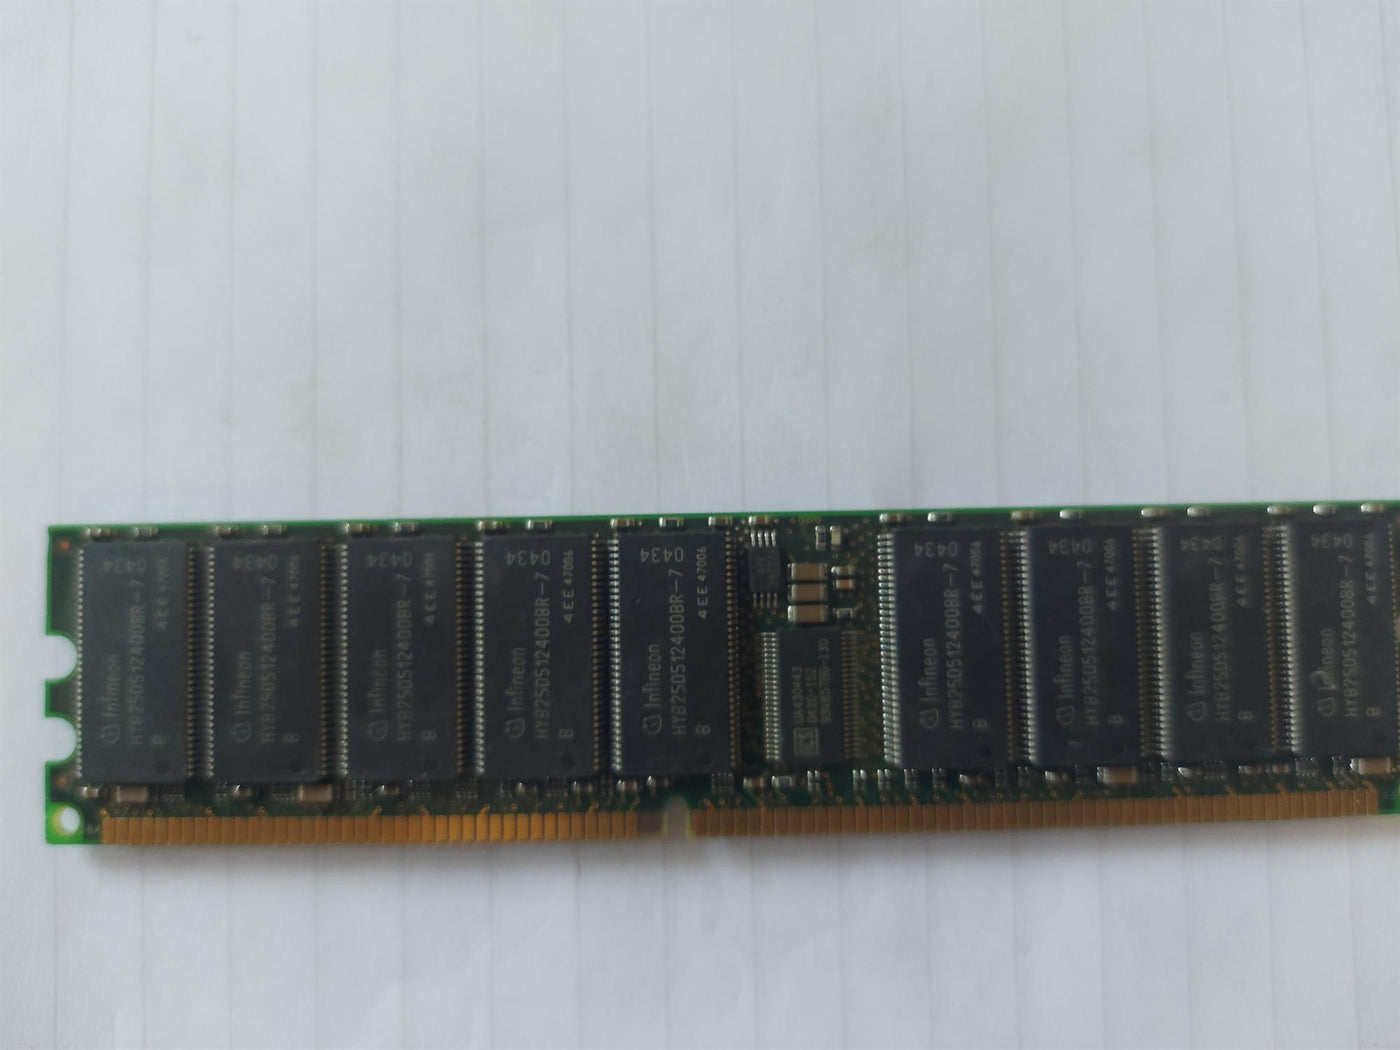 Infineon Sun 1GB DDR-266MHz PC2100 ECC Registered CL2.5 184-Pin DIMM Memory Module (HYS72D128521GR-7-B 370-4940-01)